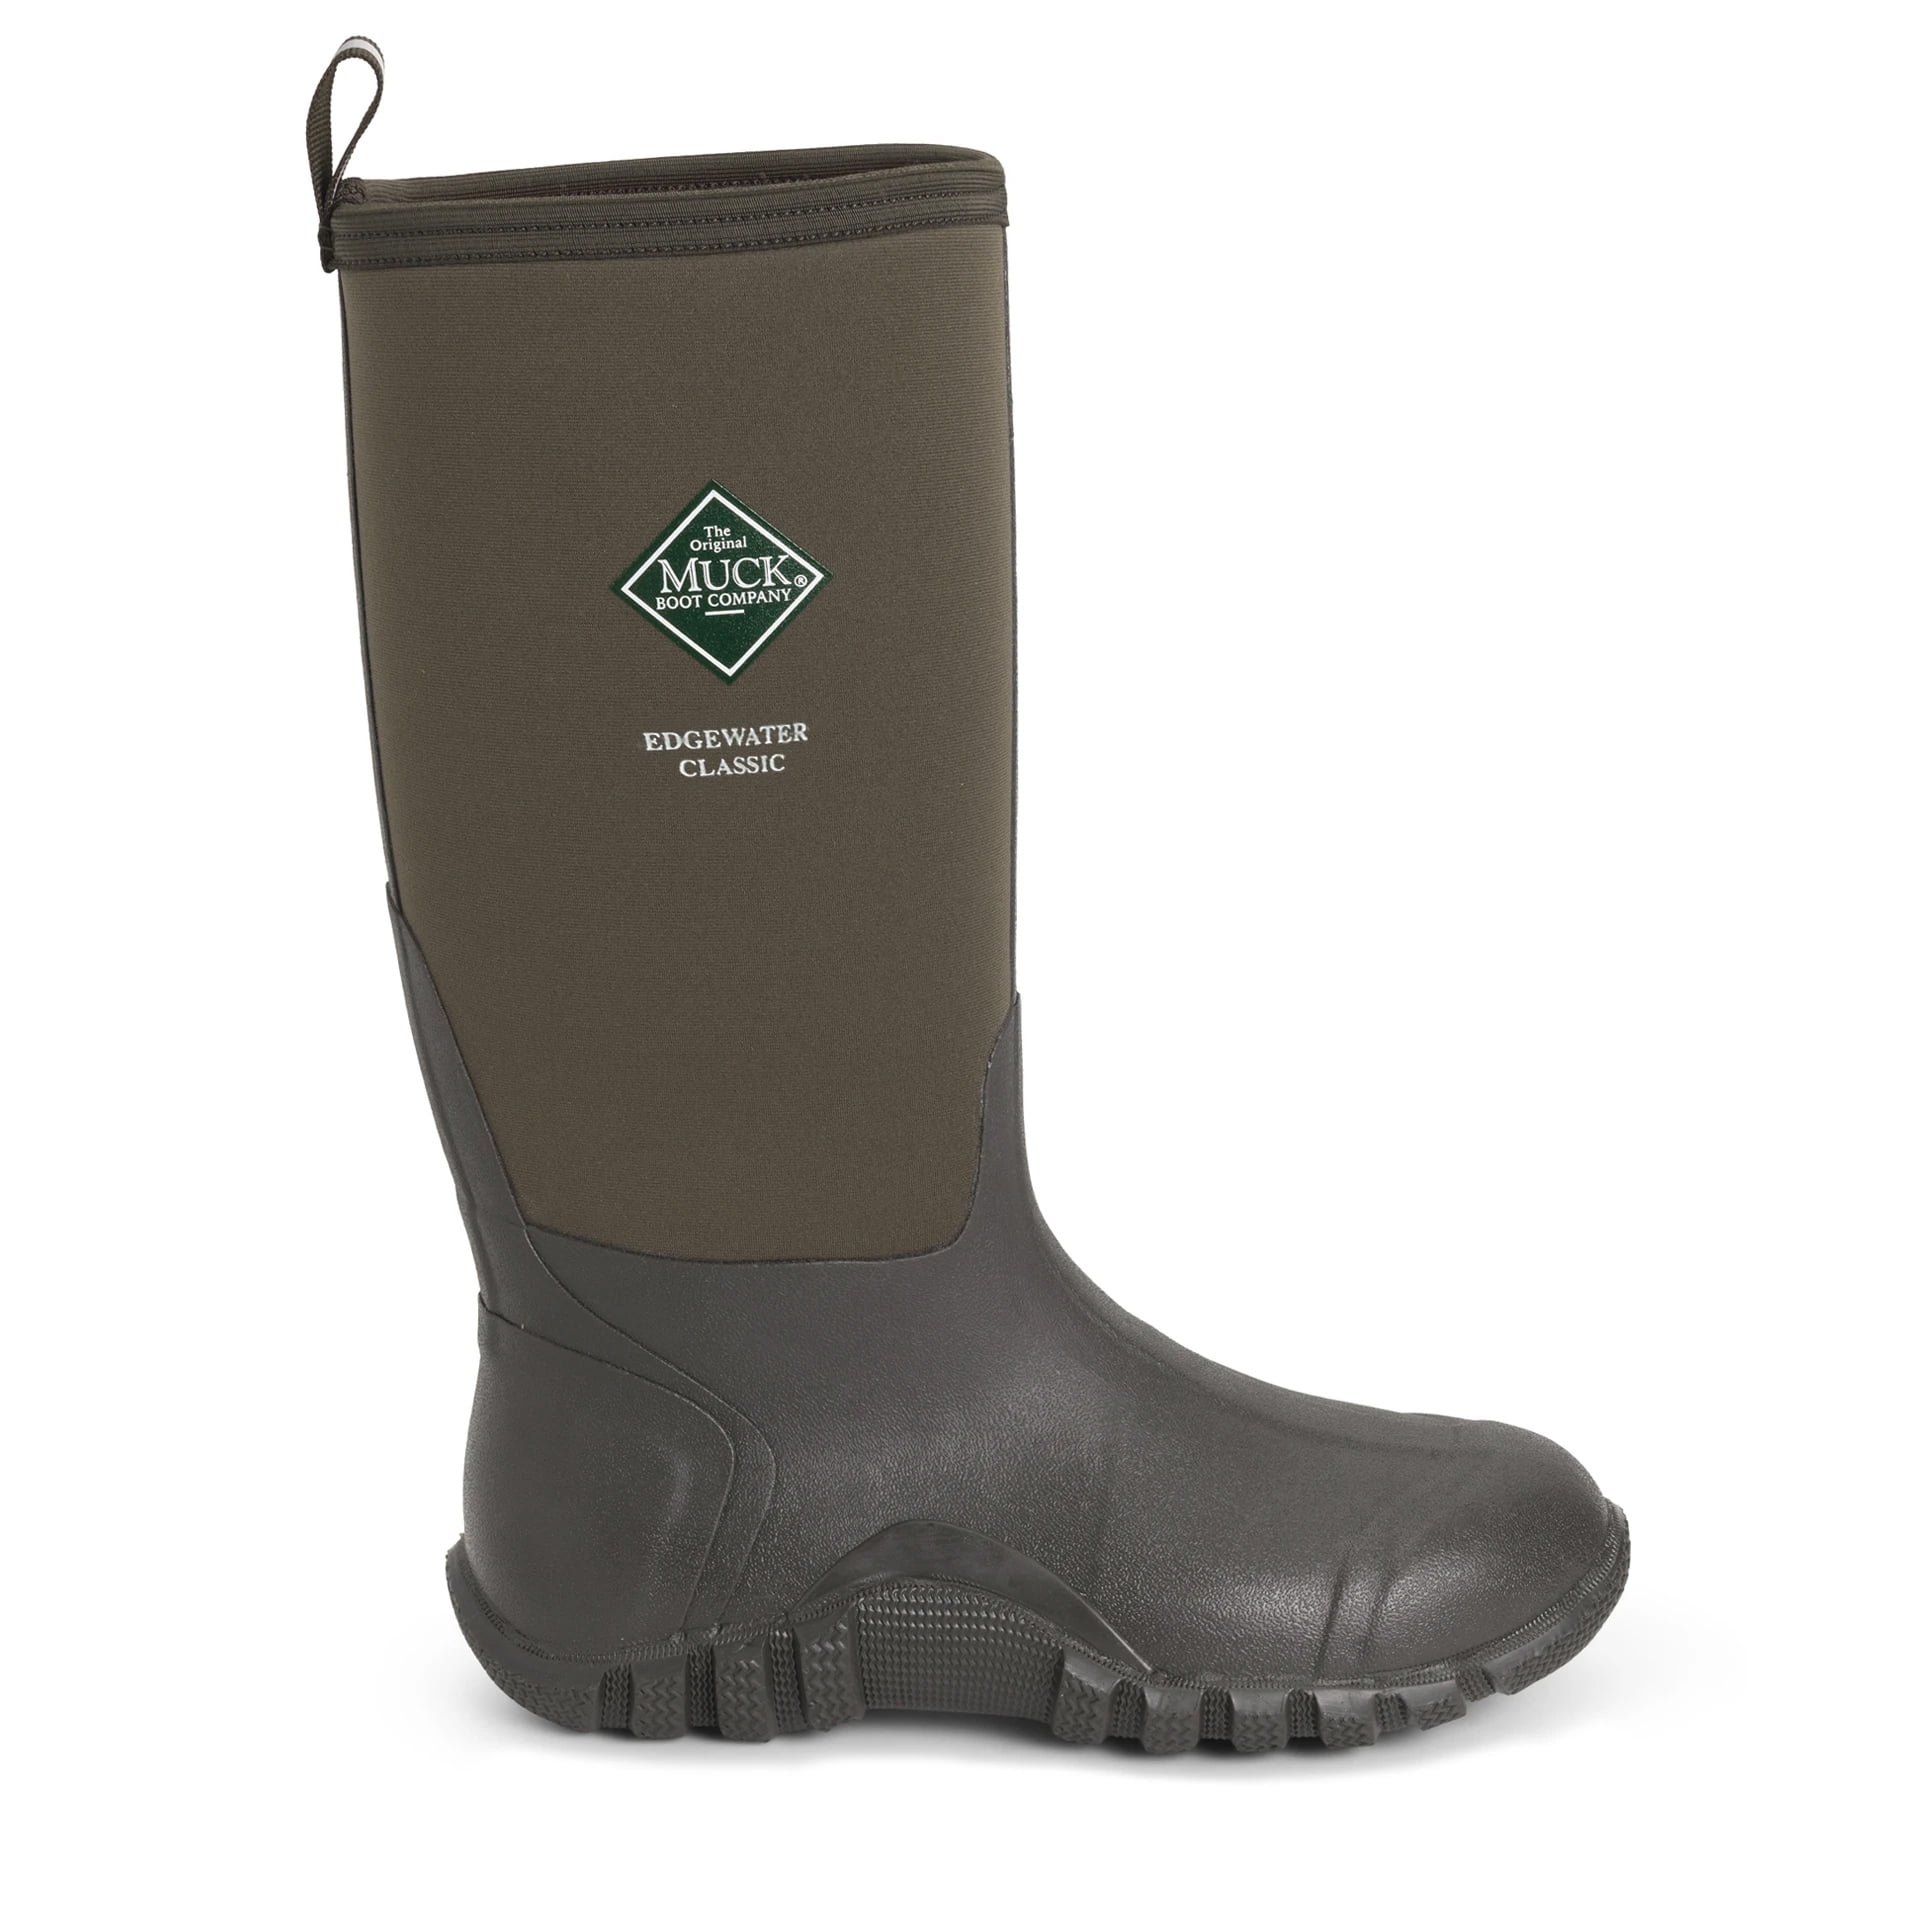 Muck Boot Company - Men's Muck Boots Edgewater Classic High Waterproof ...